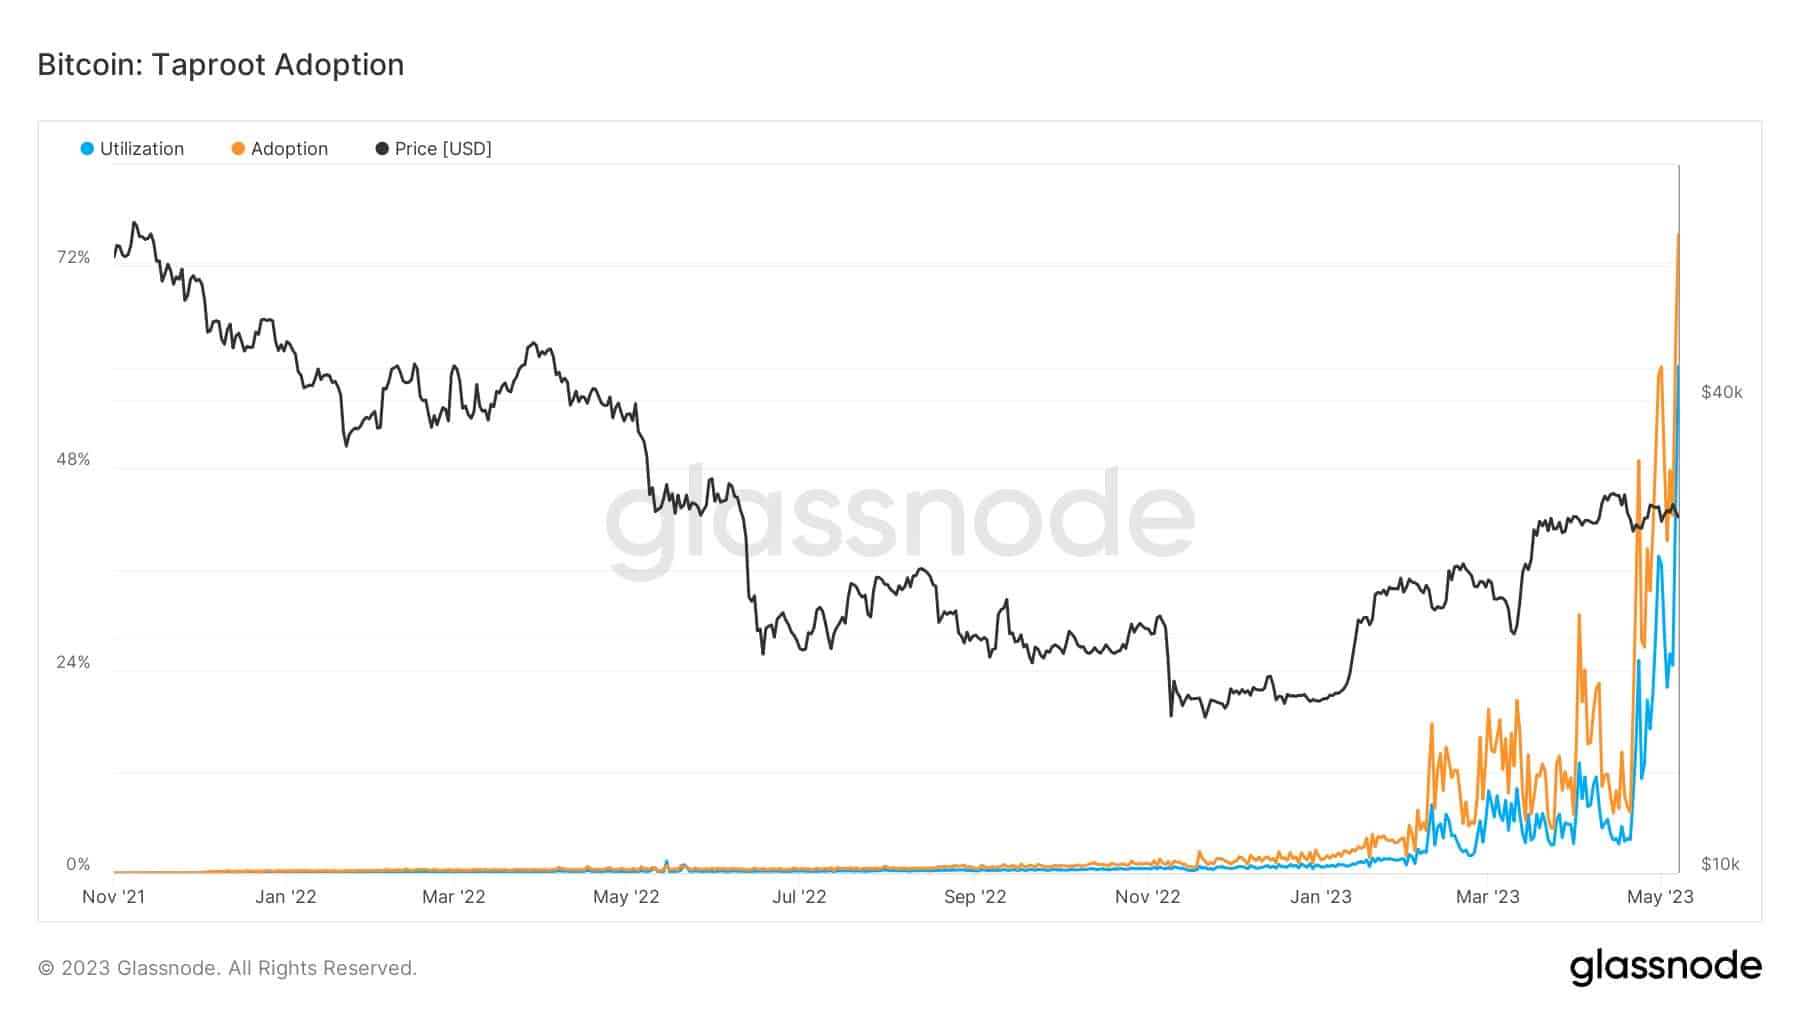 Bitcoin Transactions via Taproot. Source: Glassnode